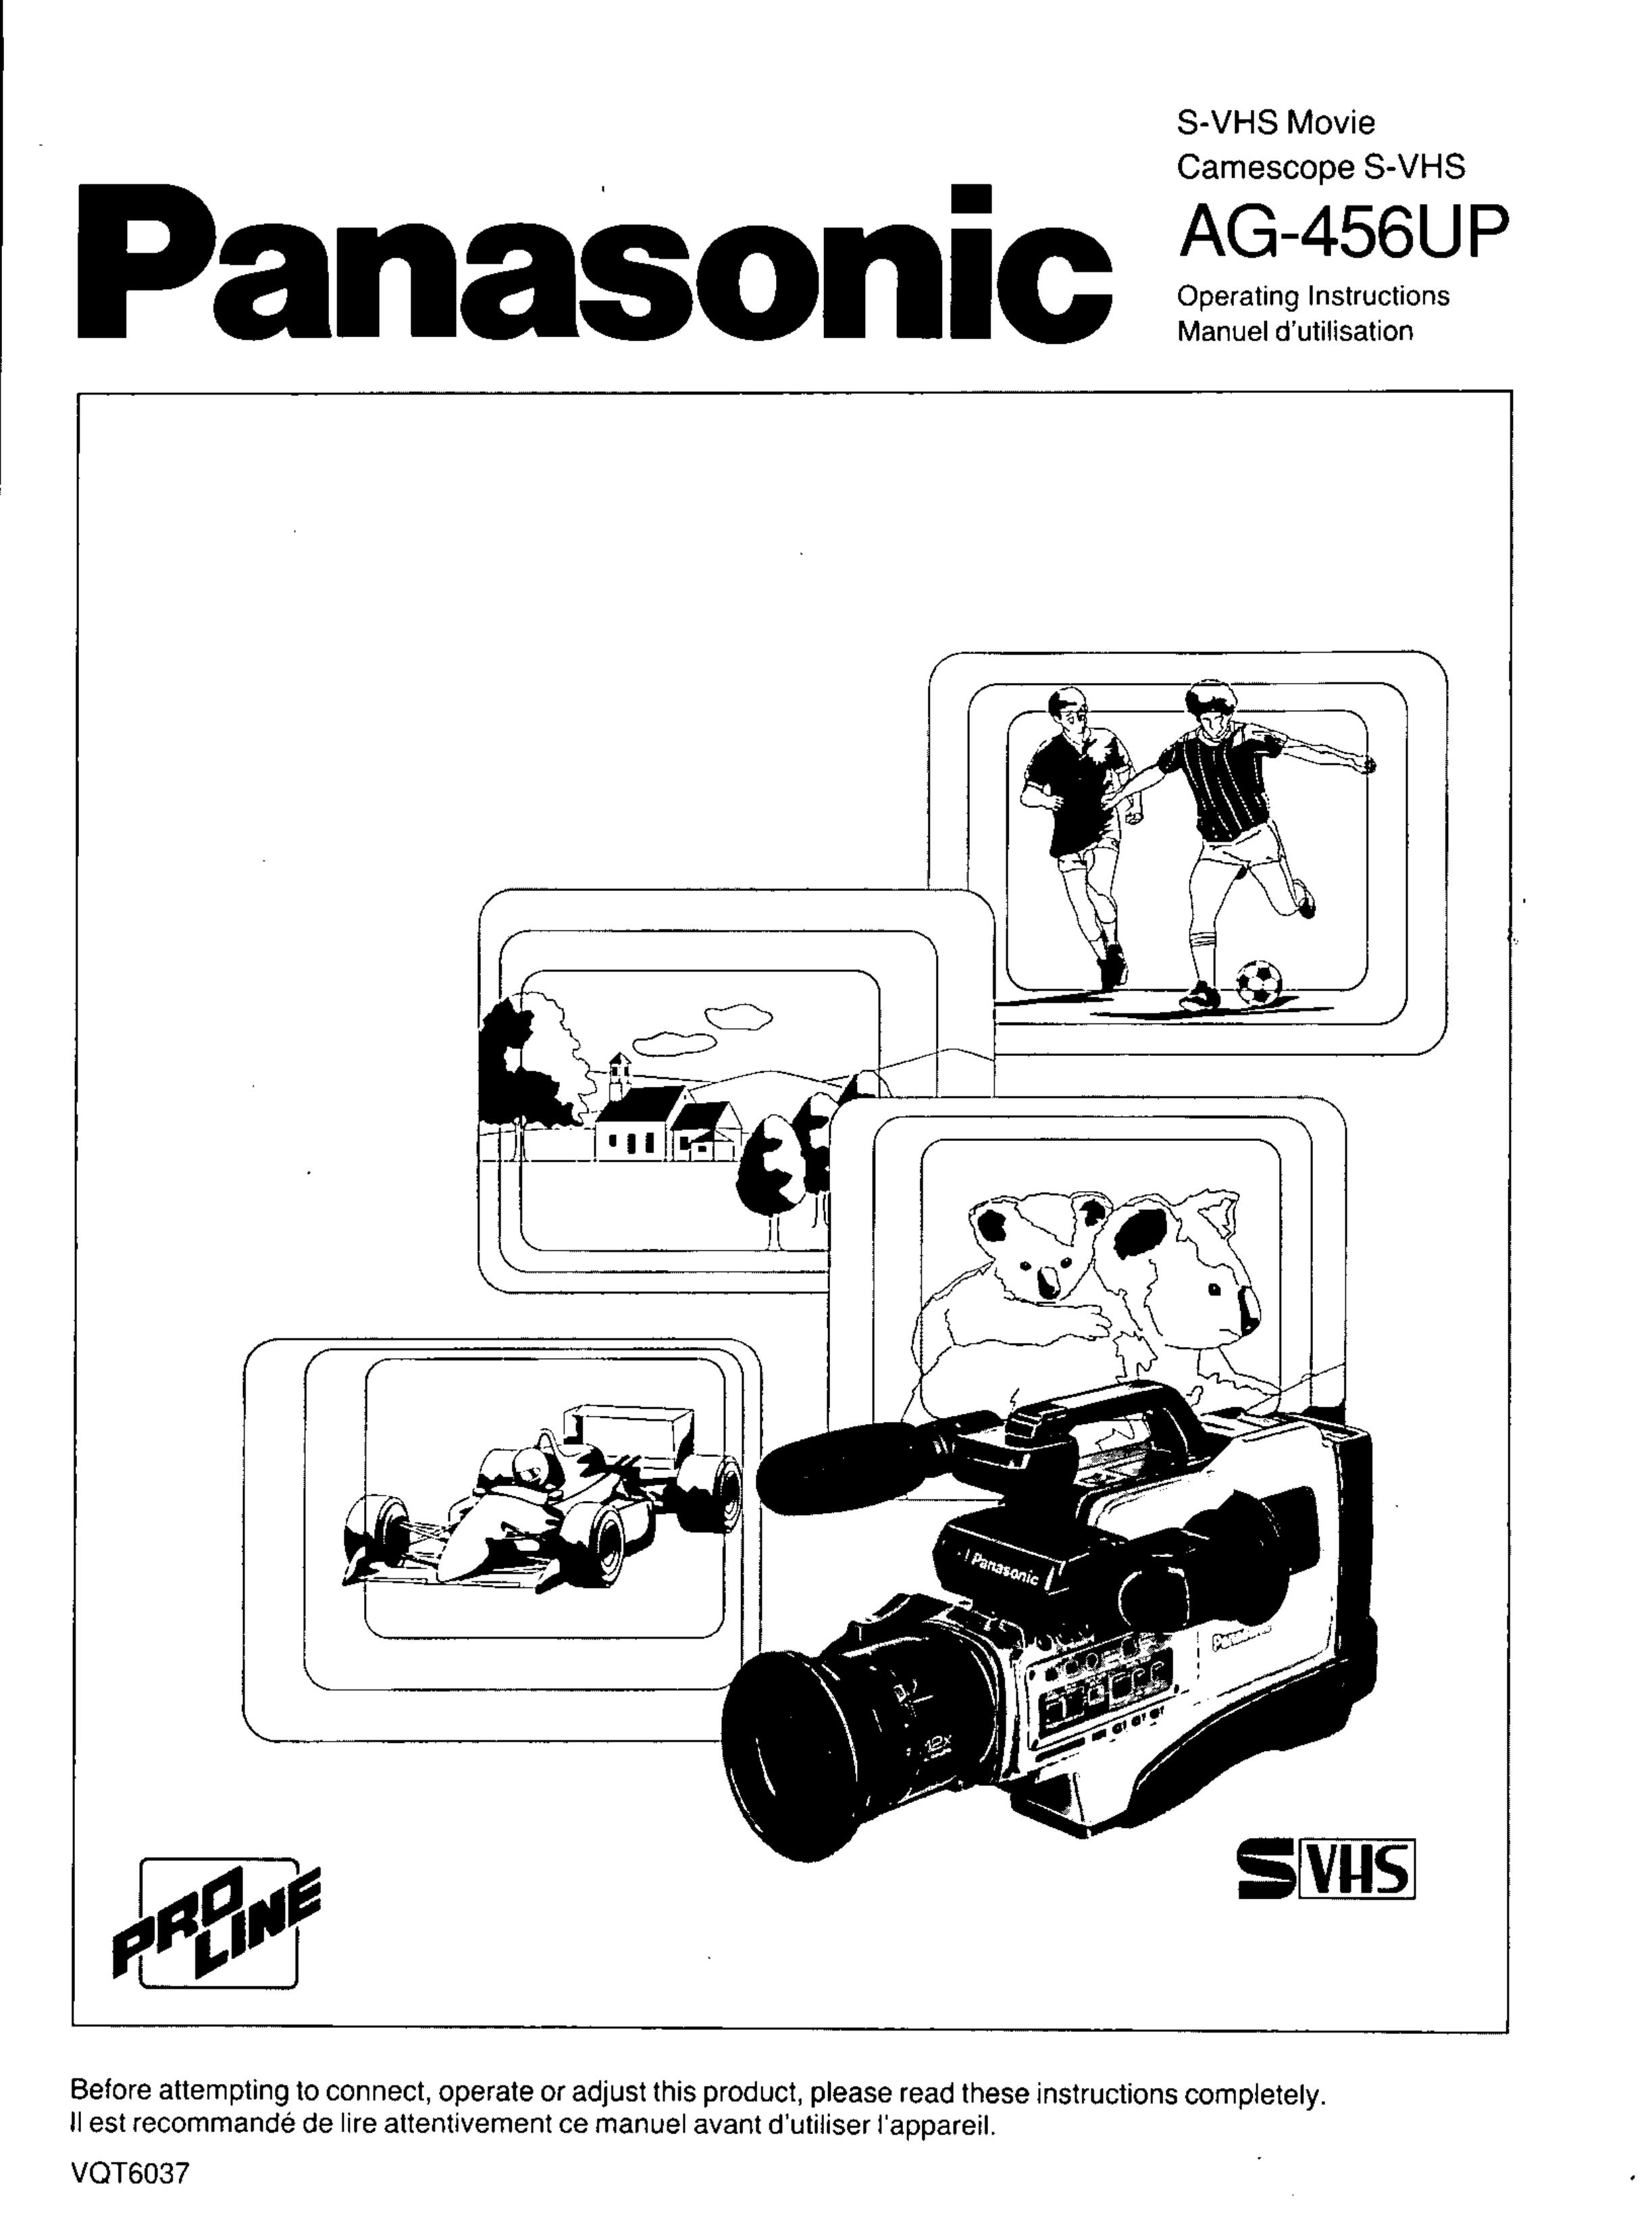 Panasonic AG-456UP Camcorder User Manual